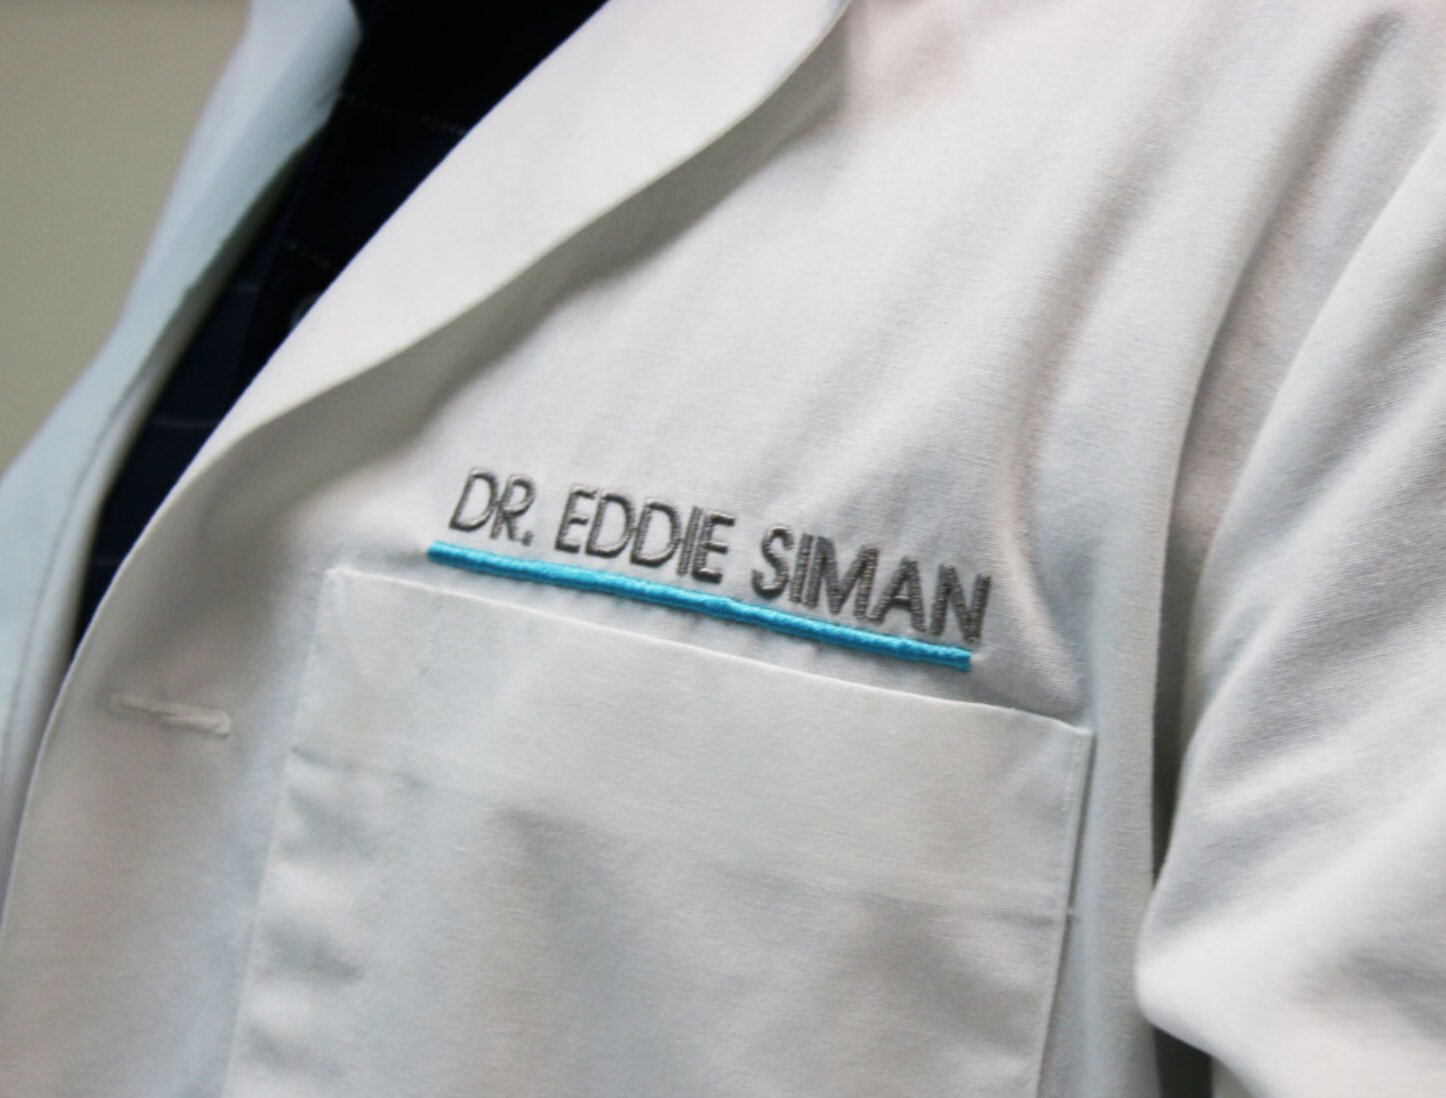 Sherman Oaks TMJ expert Eddie Siman name tag